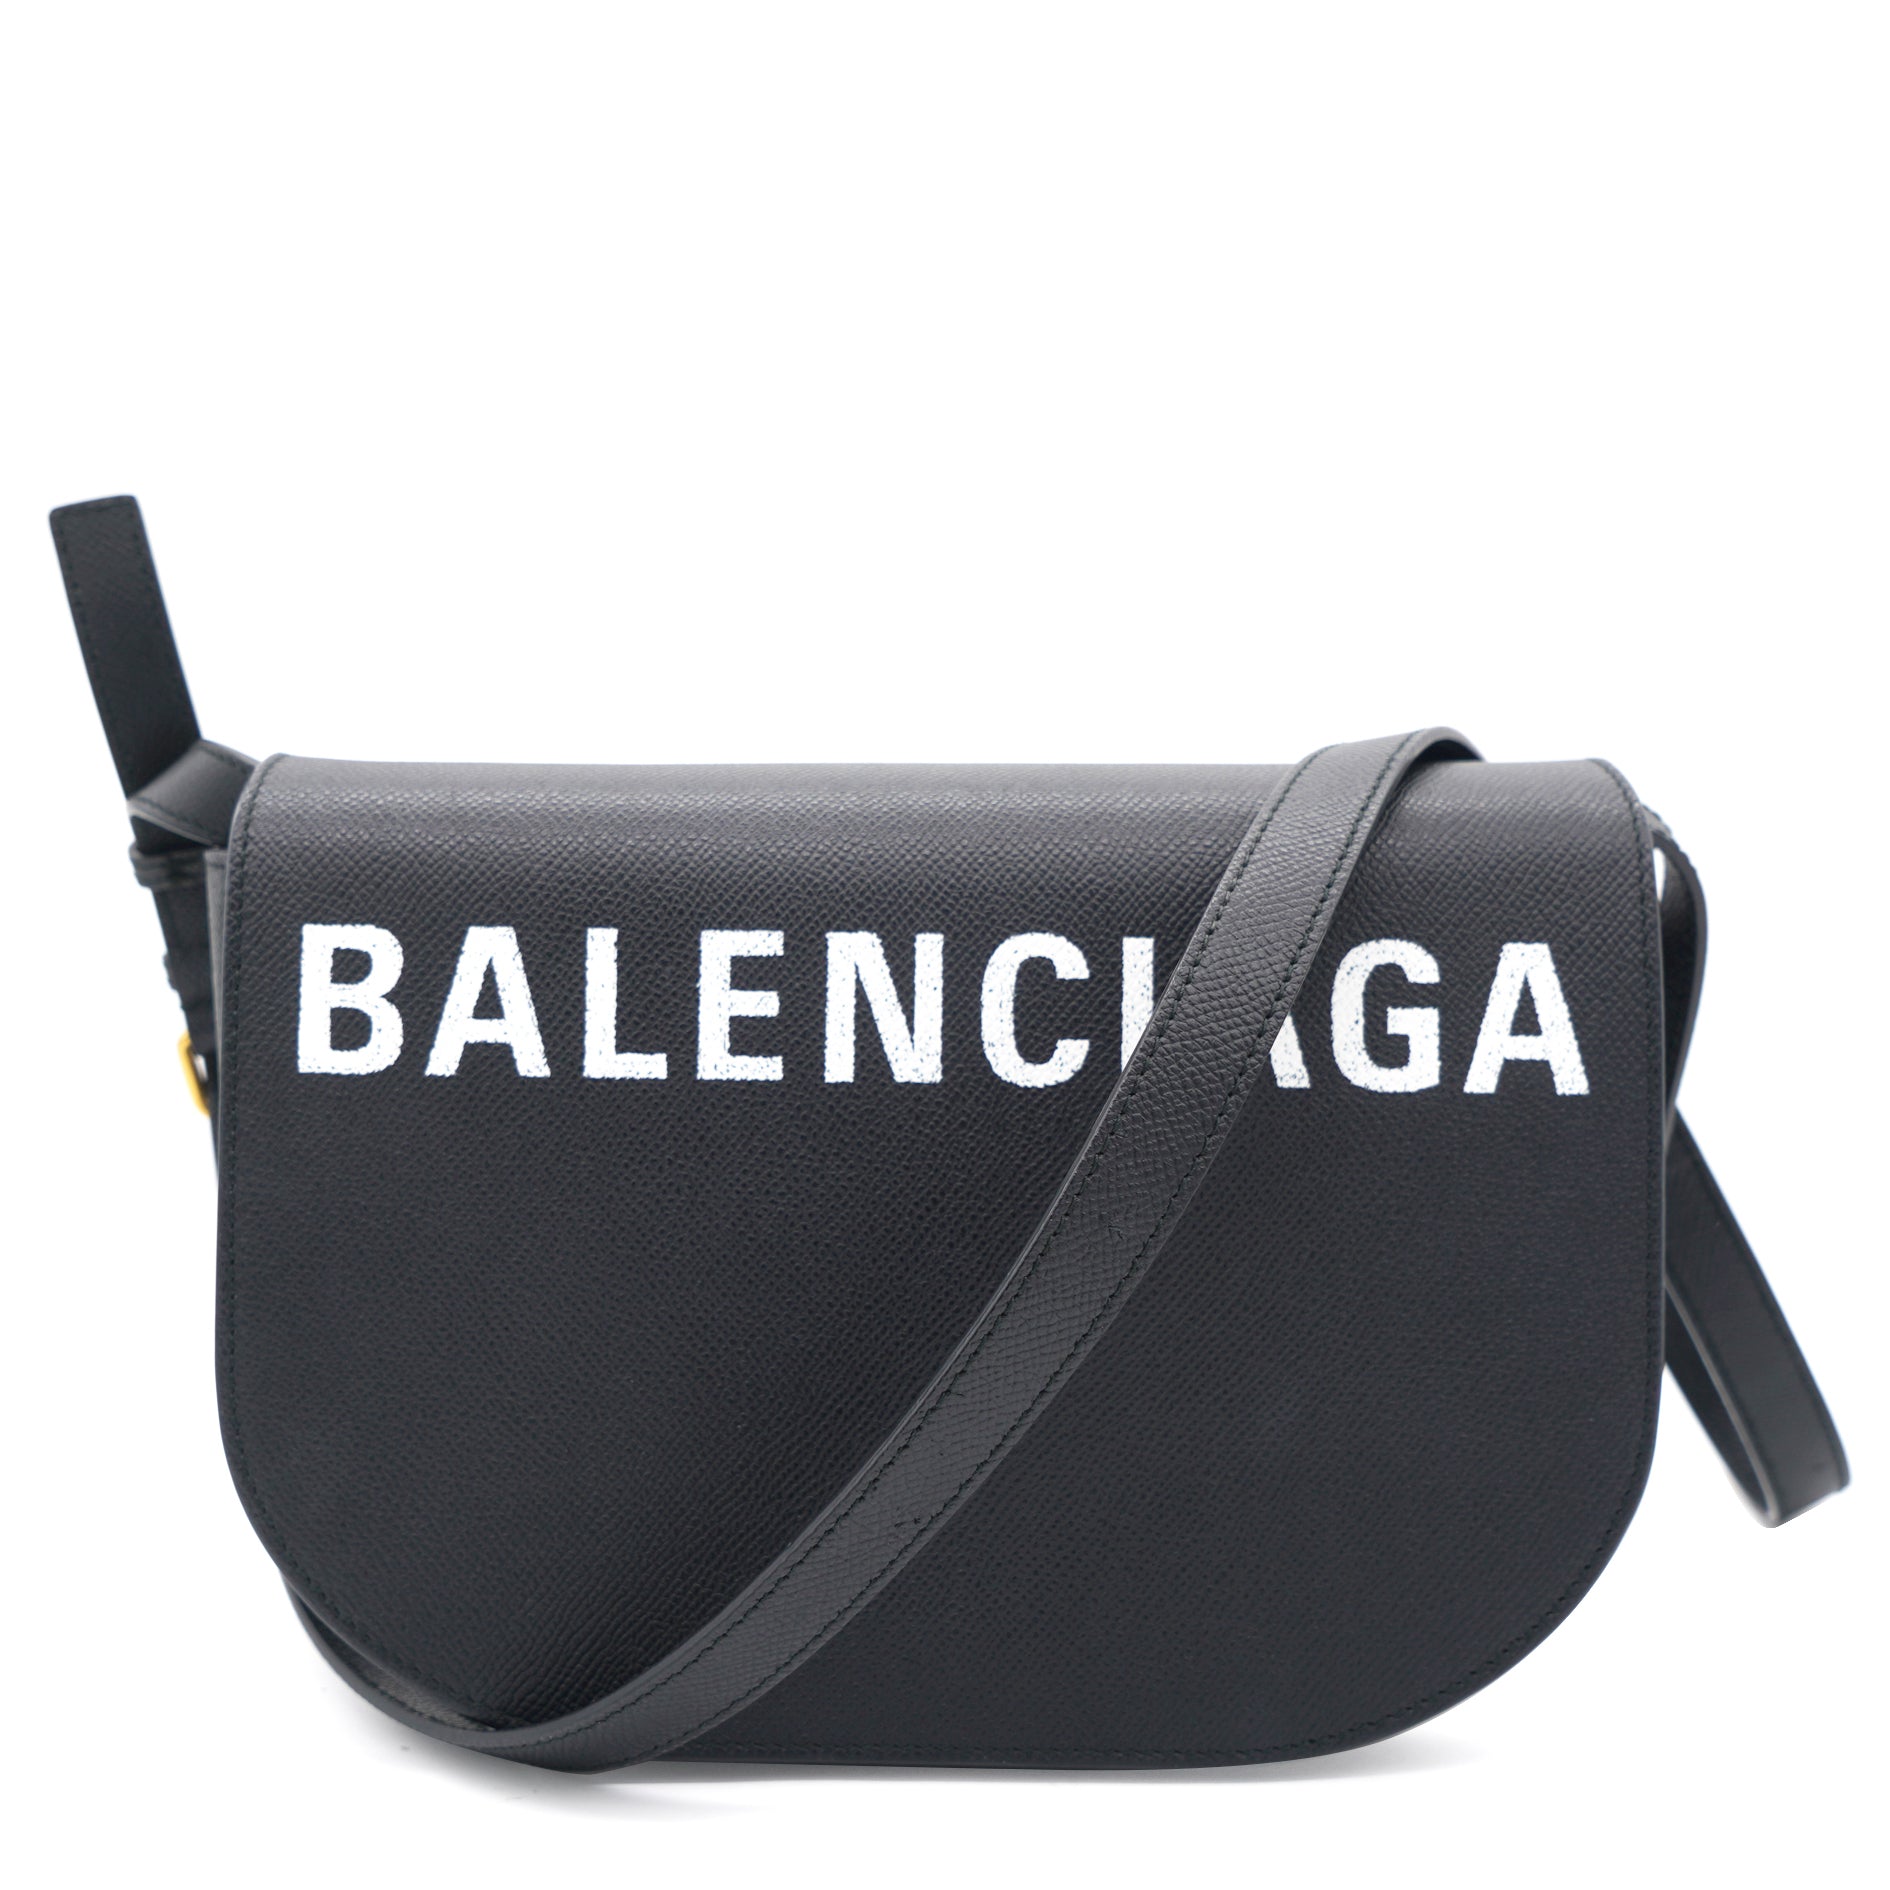 White Medium Raver Bag by Balenciaga on Sale